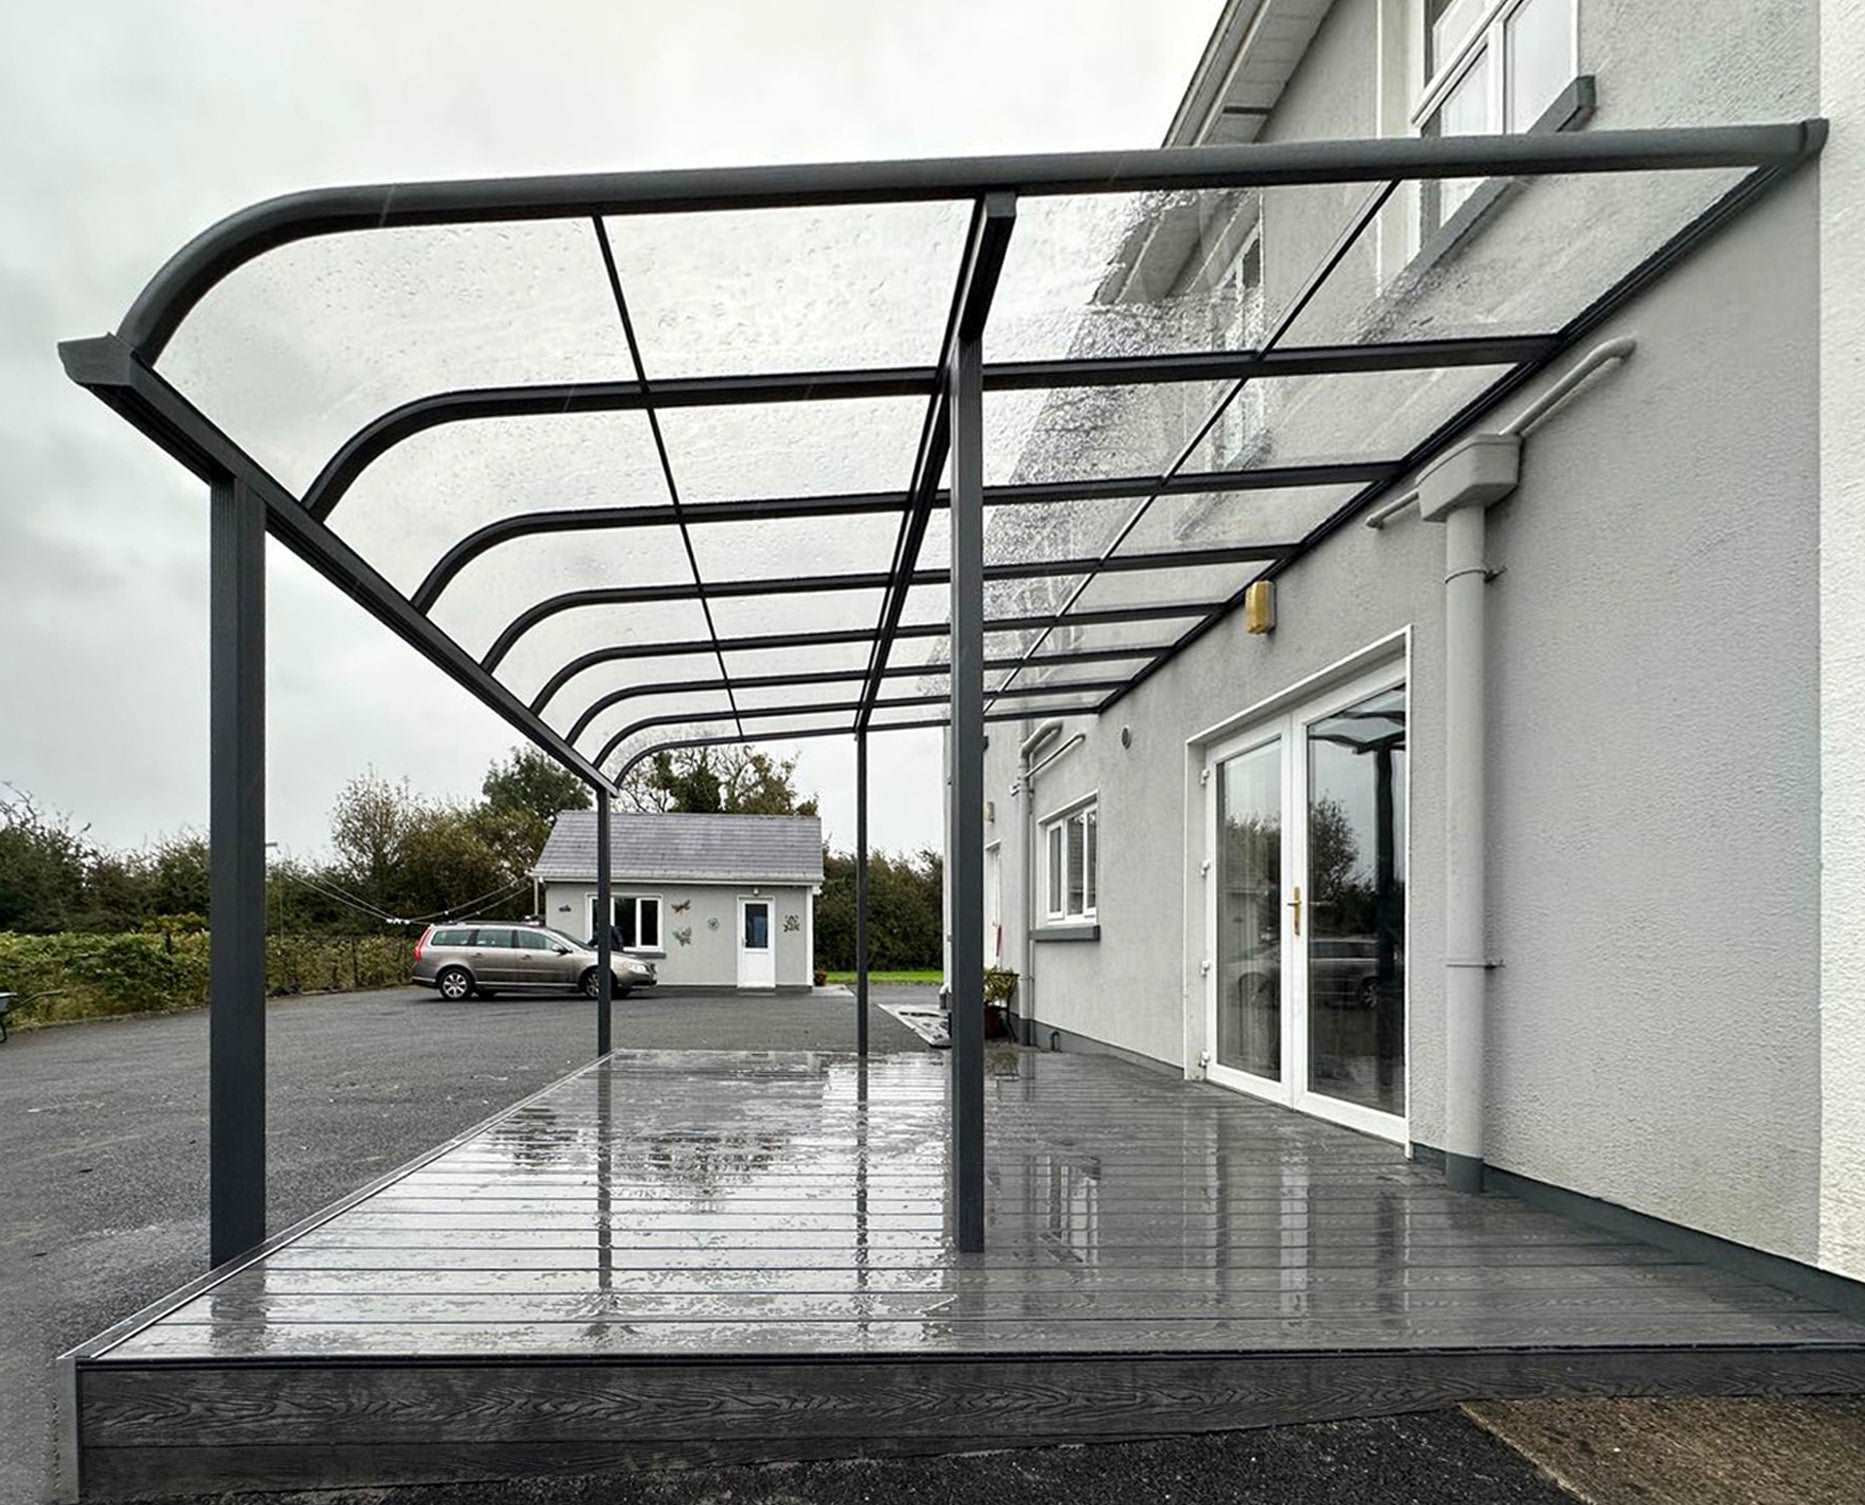 Roscommon aluminium canopy with composite decking